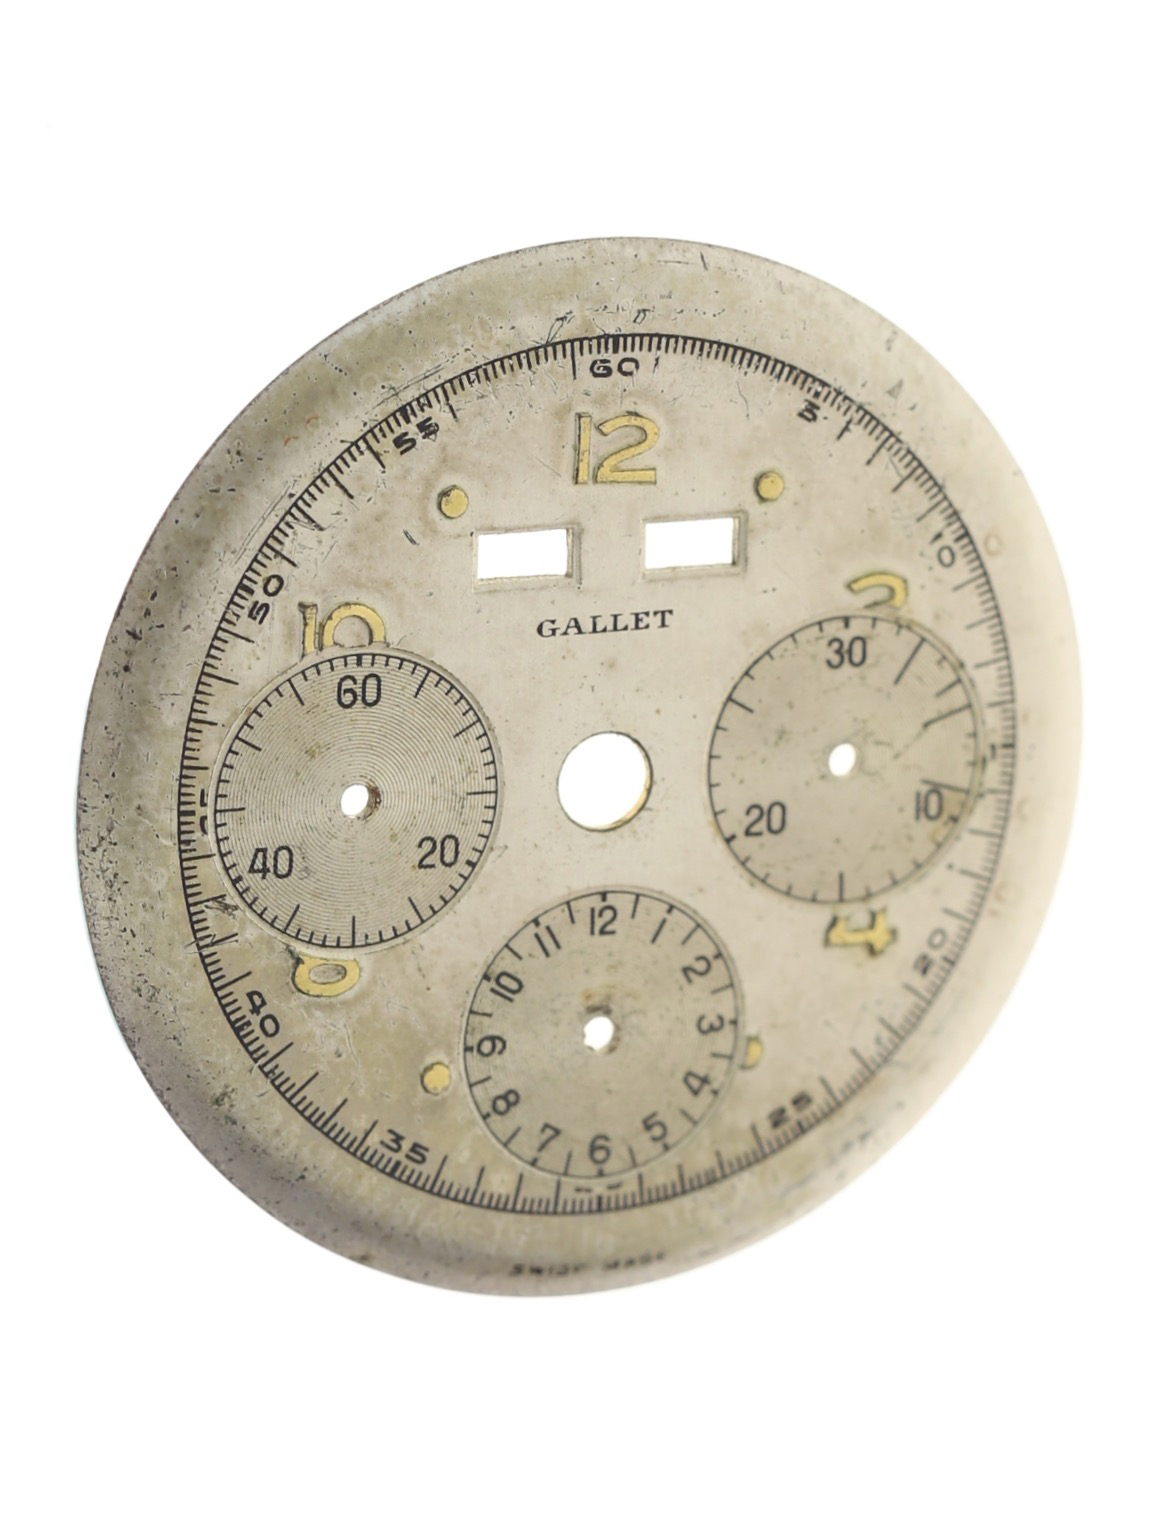 Gallet Valjoux 72 c Chronograph 1960s - Gisbert A. Joseph Watches